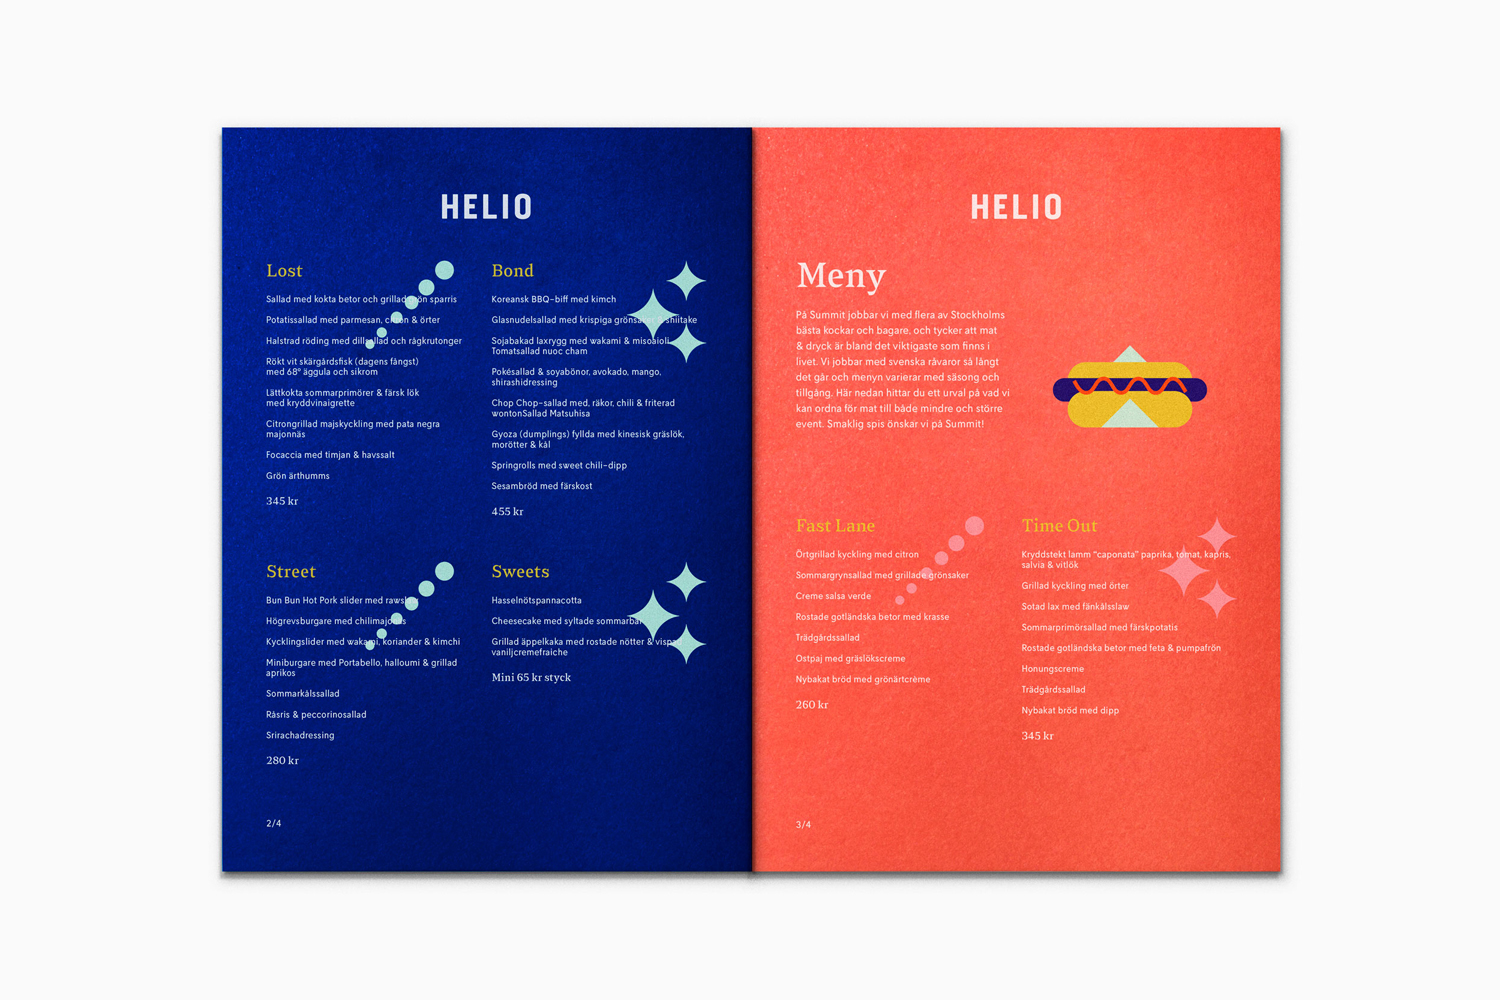 Menu Design – Helio by Bedow, Sweden